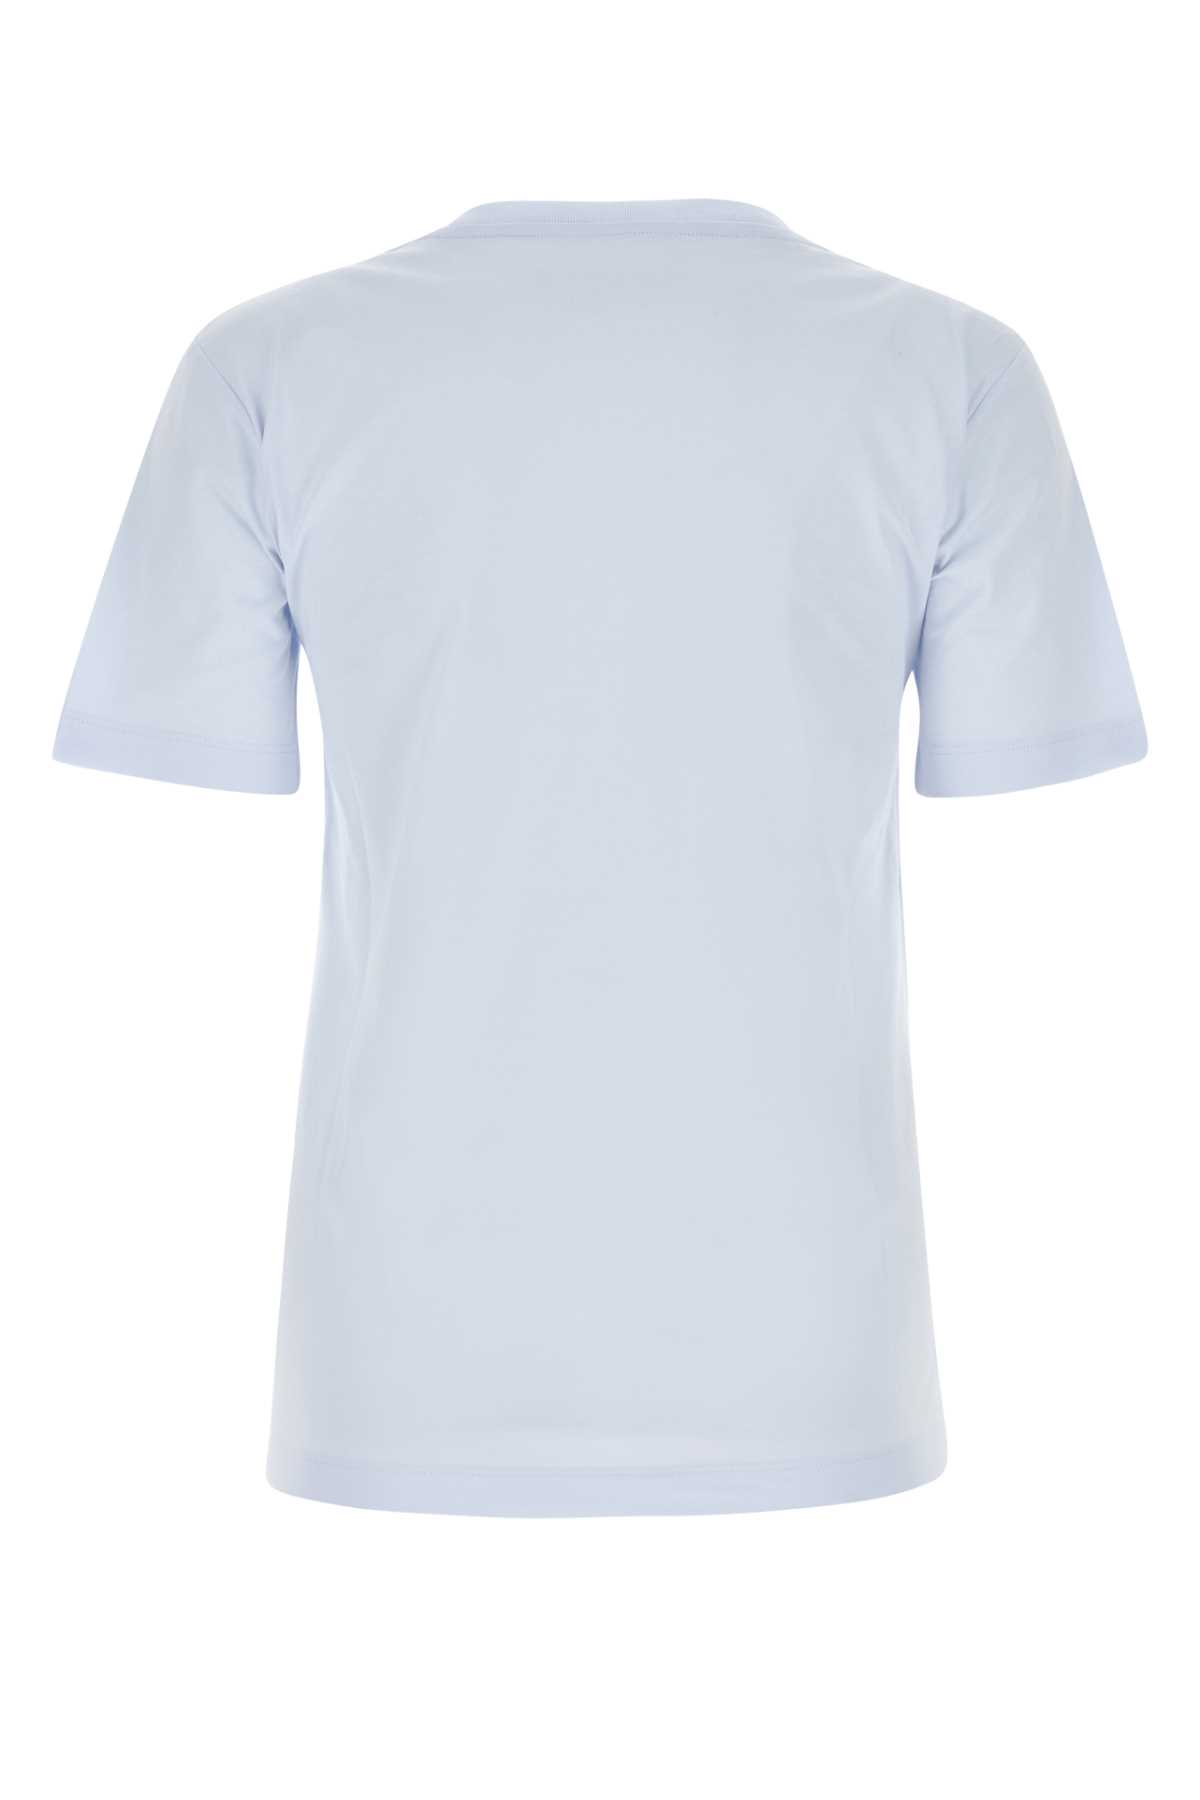 Marni Powder Blue Cotton T-shirt In 00b21